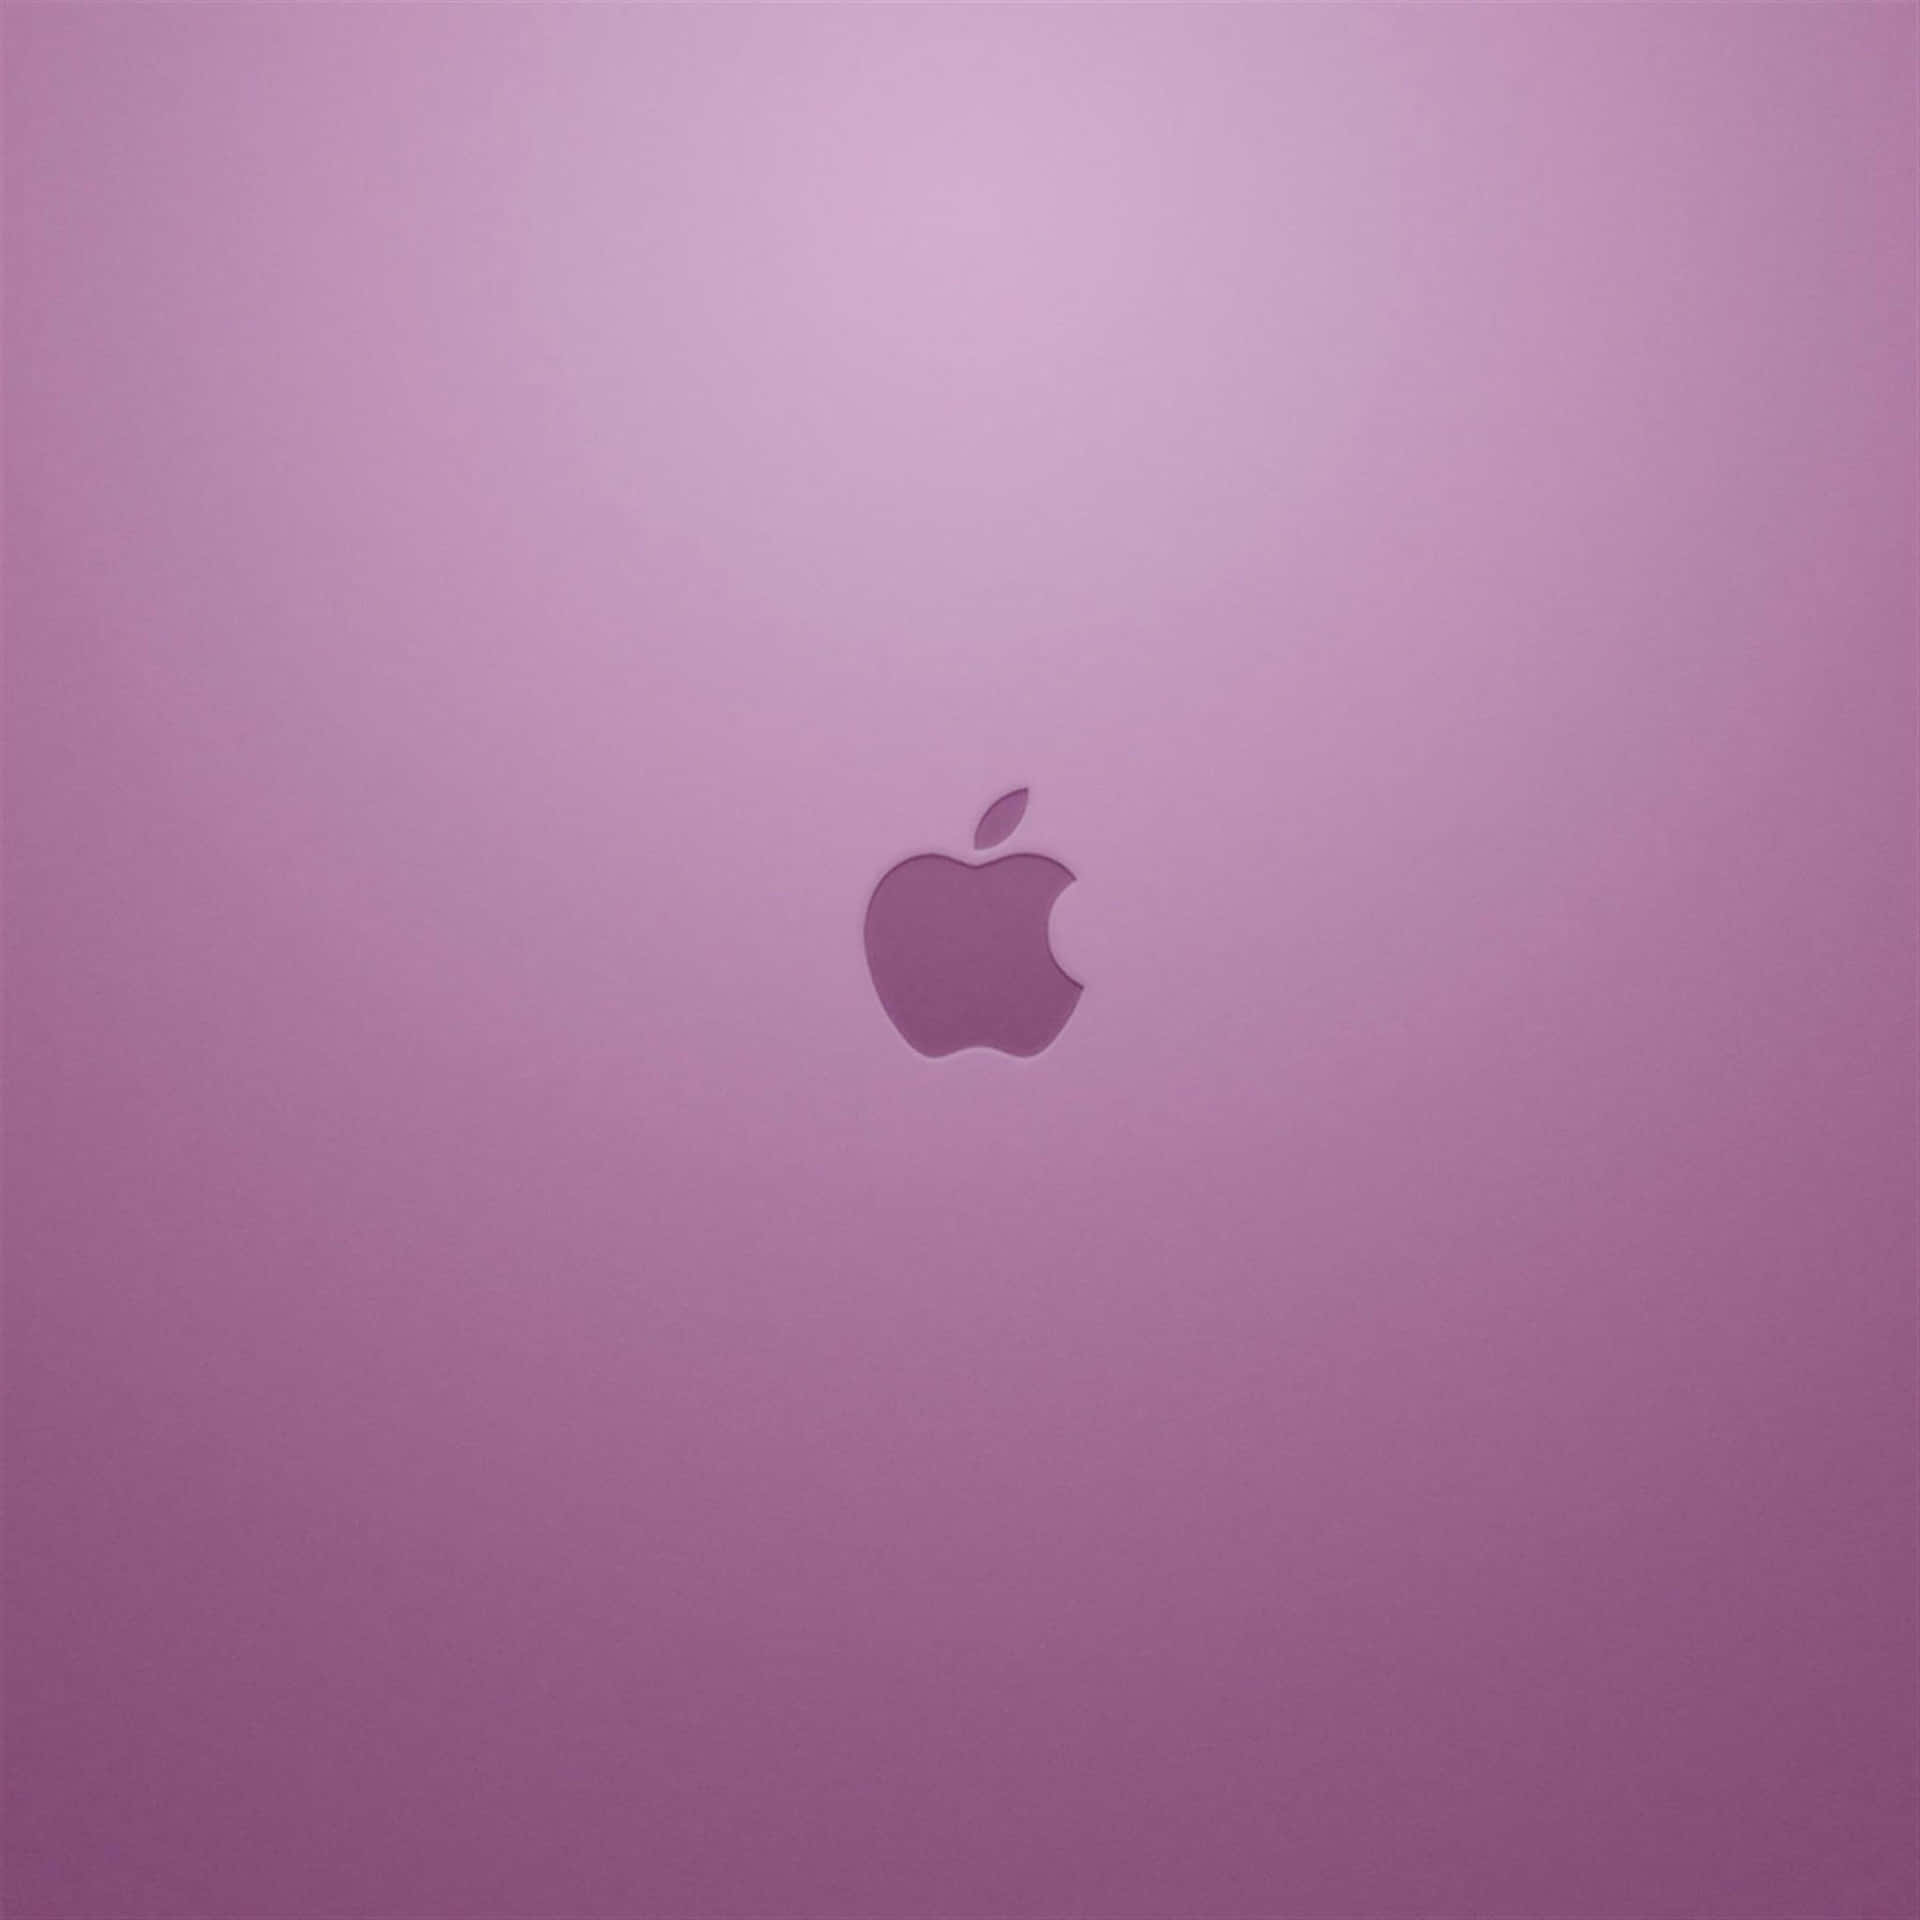 Pink Ipad Apple Logo Background Wallpaper